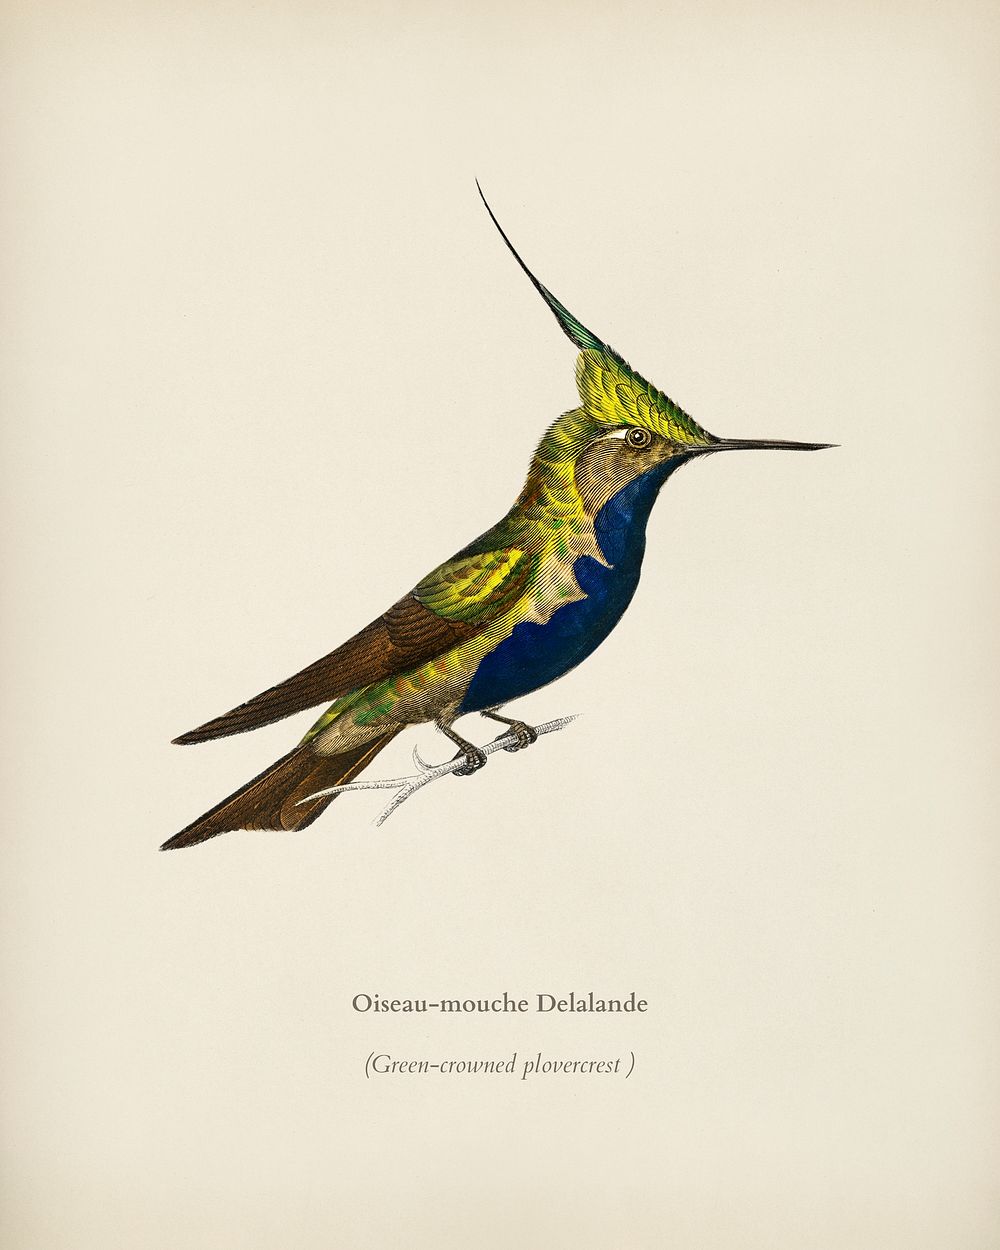 Green-crowned plovercrest (Oiseau-mouche Delalande) illustrated by Charles Dessalines D' Orbigny (1806-1876). Digitally…